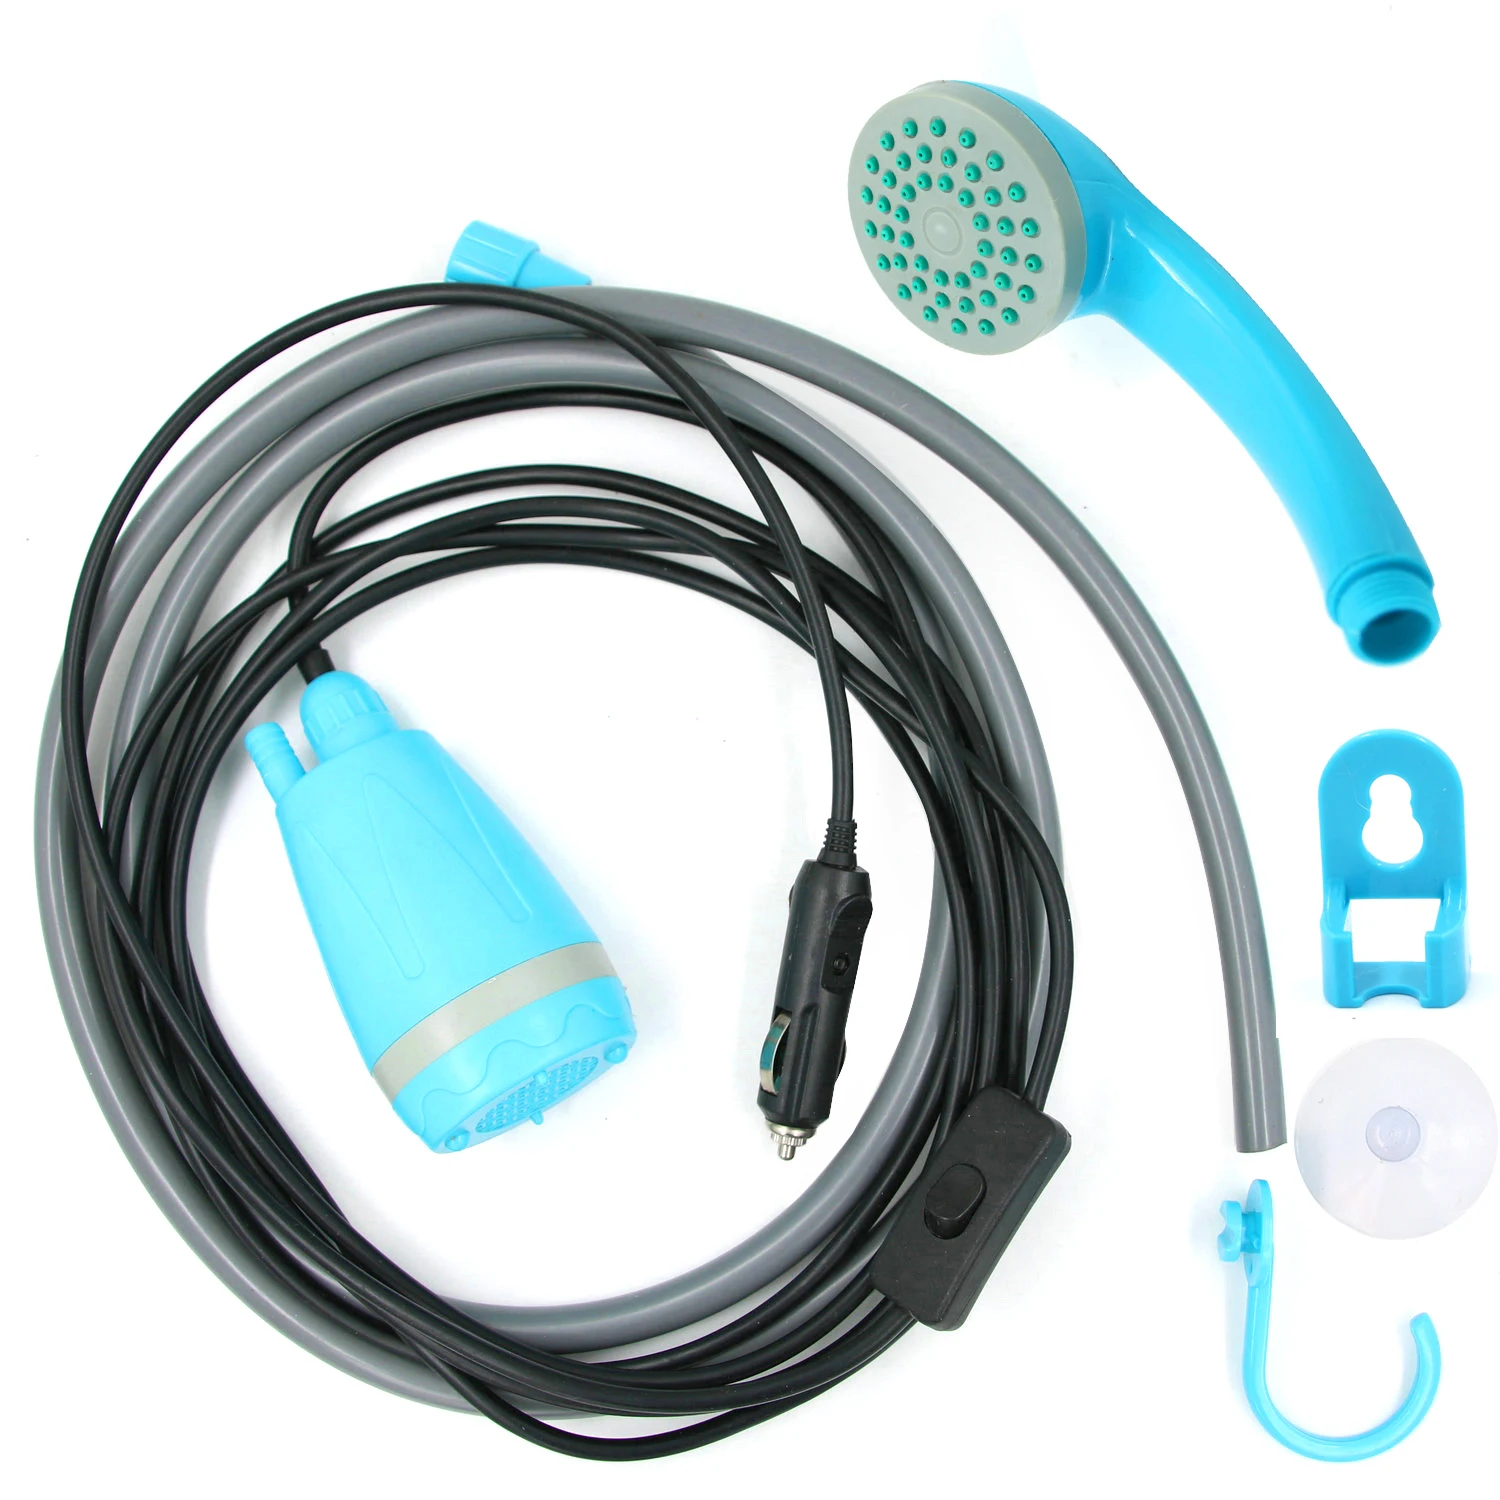 KKMOON Portable 12V Cigarette Lighter Type Shower Handheld Rechargeable Showerhead Pumps for Camping Travel Shower buy car washer